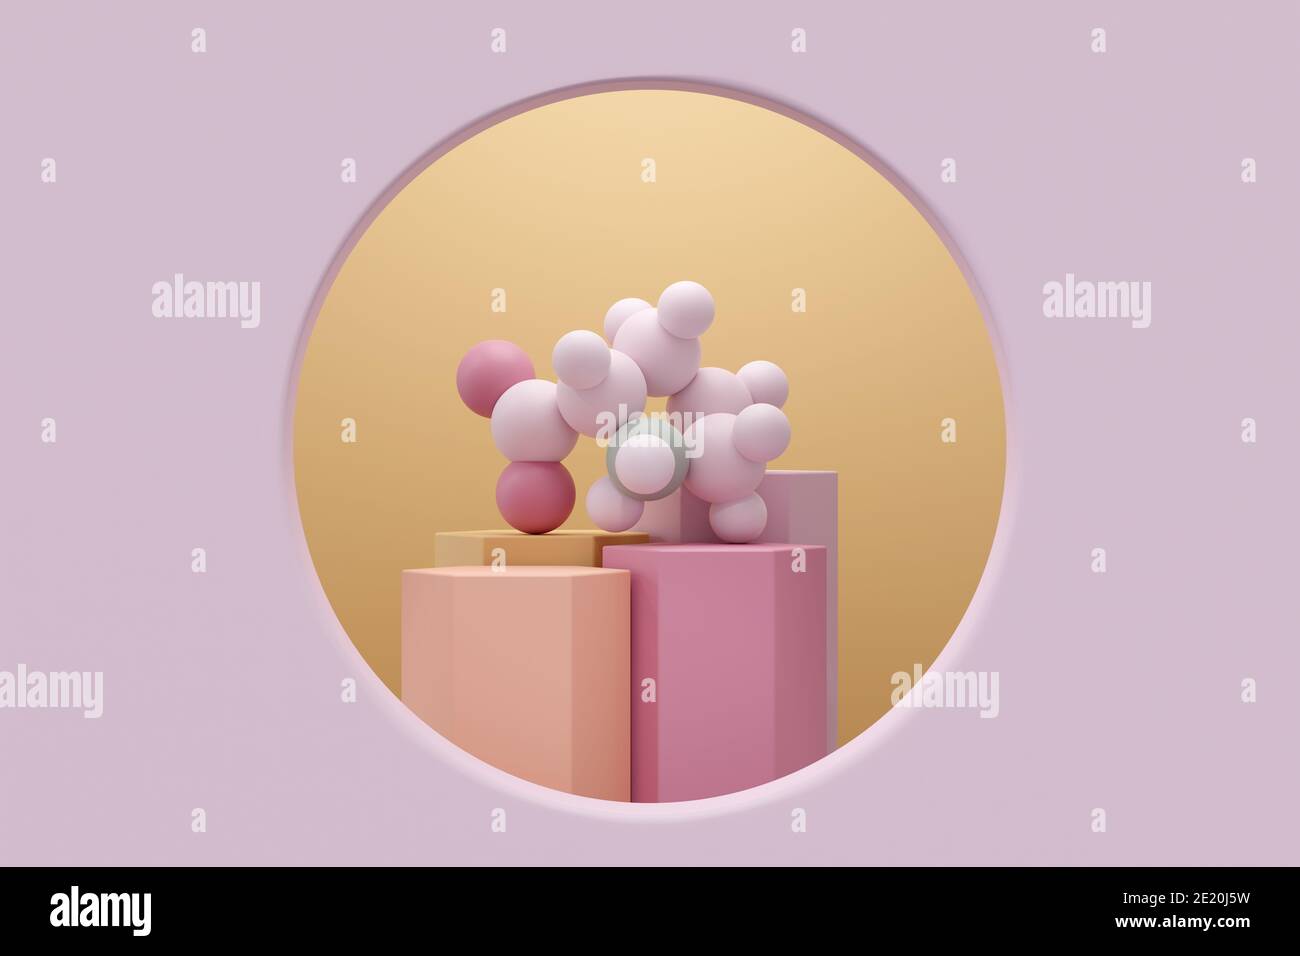 Proline (l-proline, Pro) amino acid molecule. 3D rendering. Atoms shown as color-coded spheres (oxygen dark pink, nitrogen light green, carbon light p Stock Photo